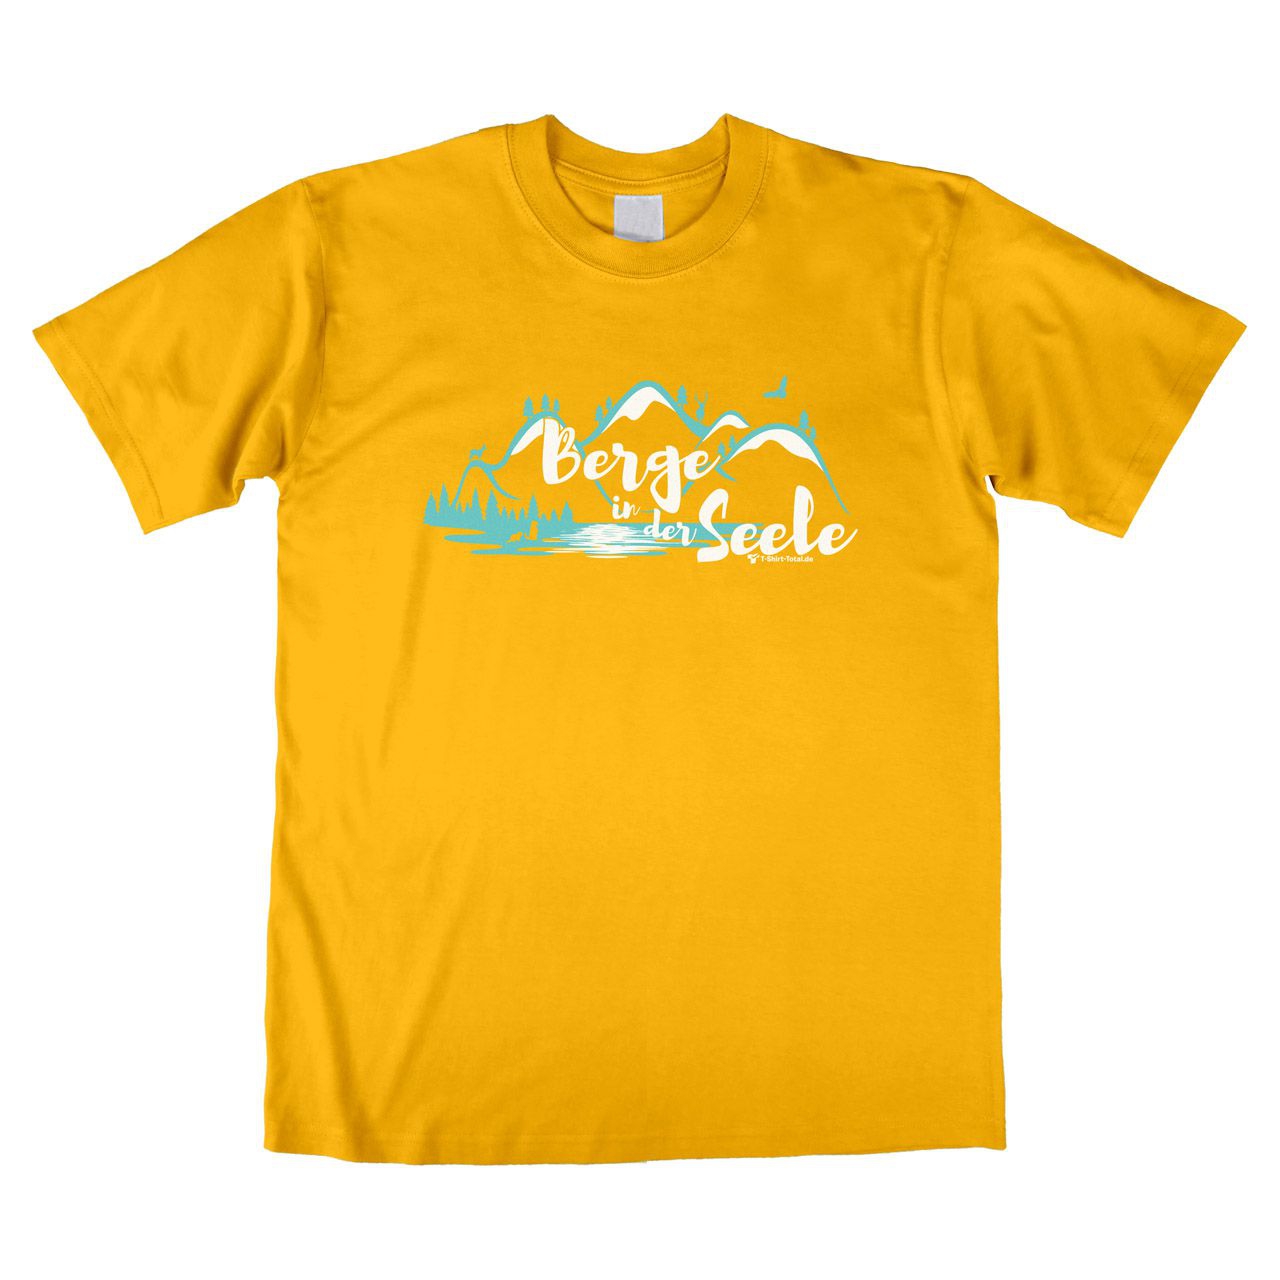 Berge in der Seele Unisex T-Shirt gelb Large